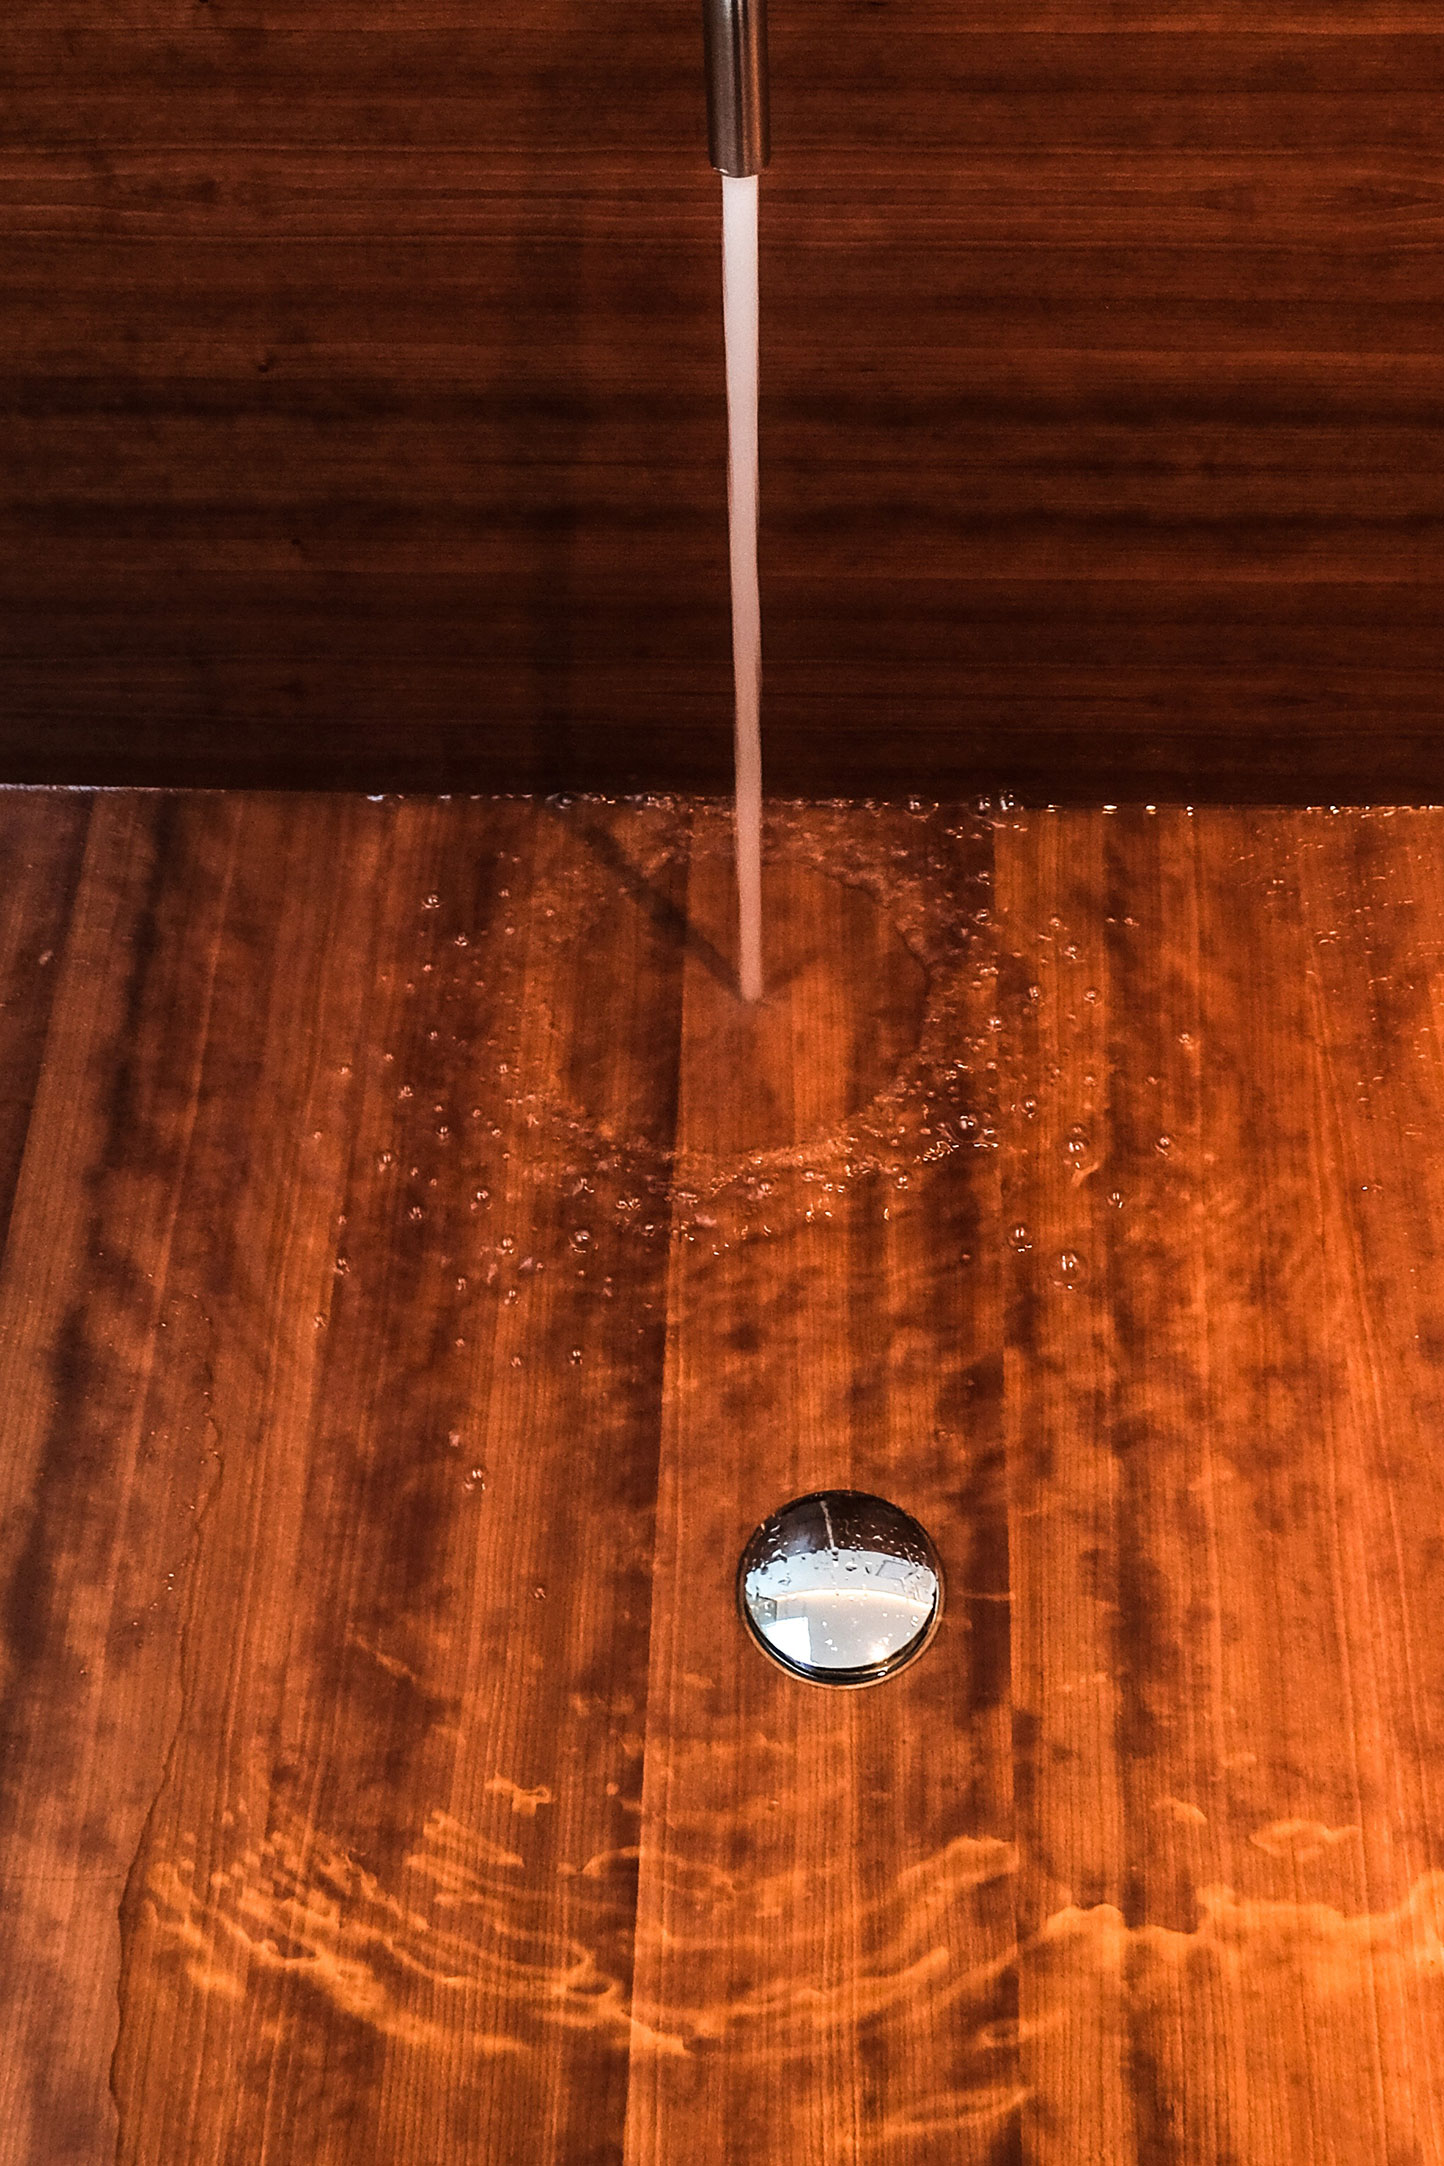 Image no. 4 of Ofuro wooden bathtub in American Cherry wood - London Cherry